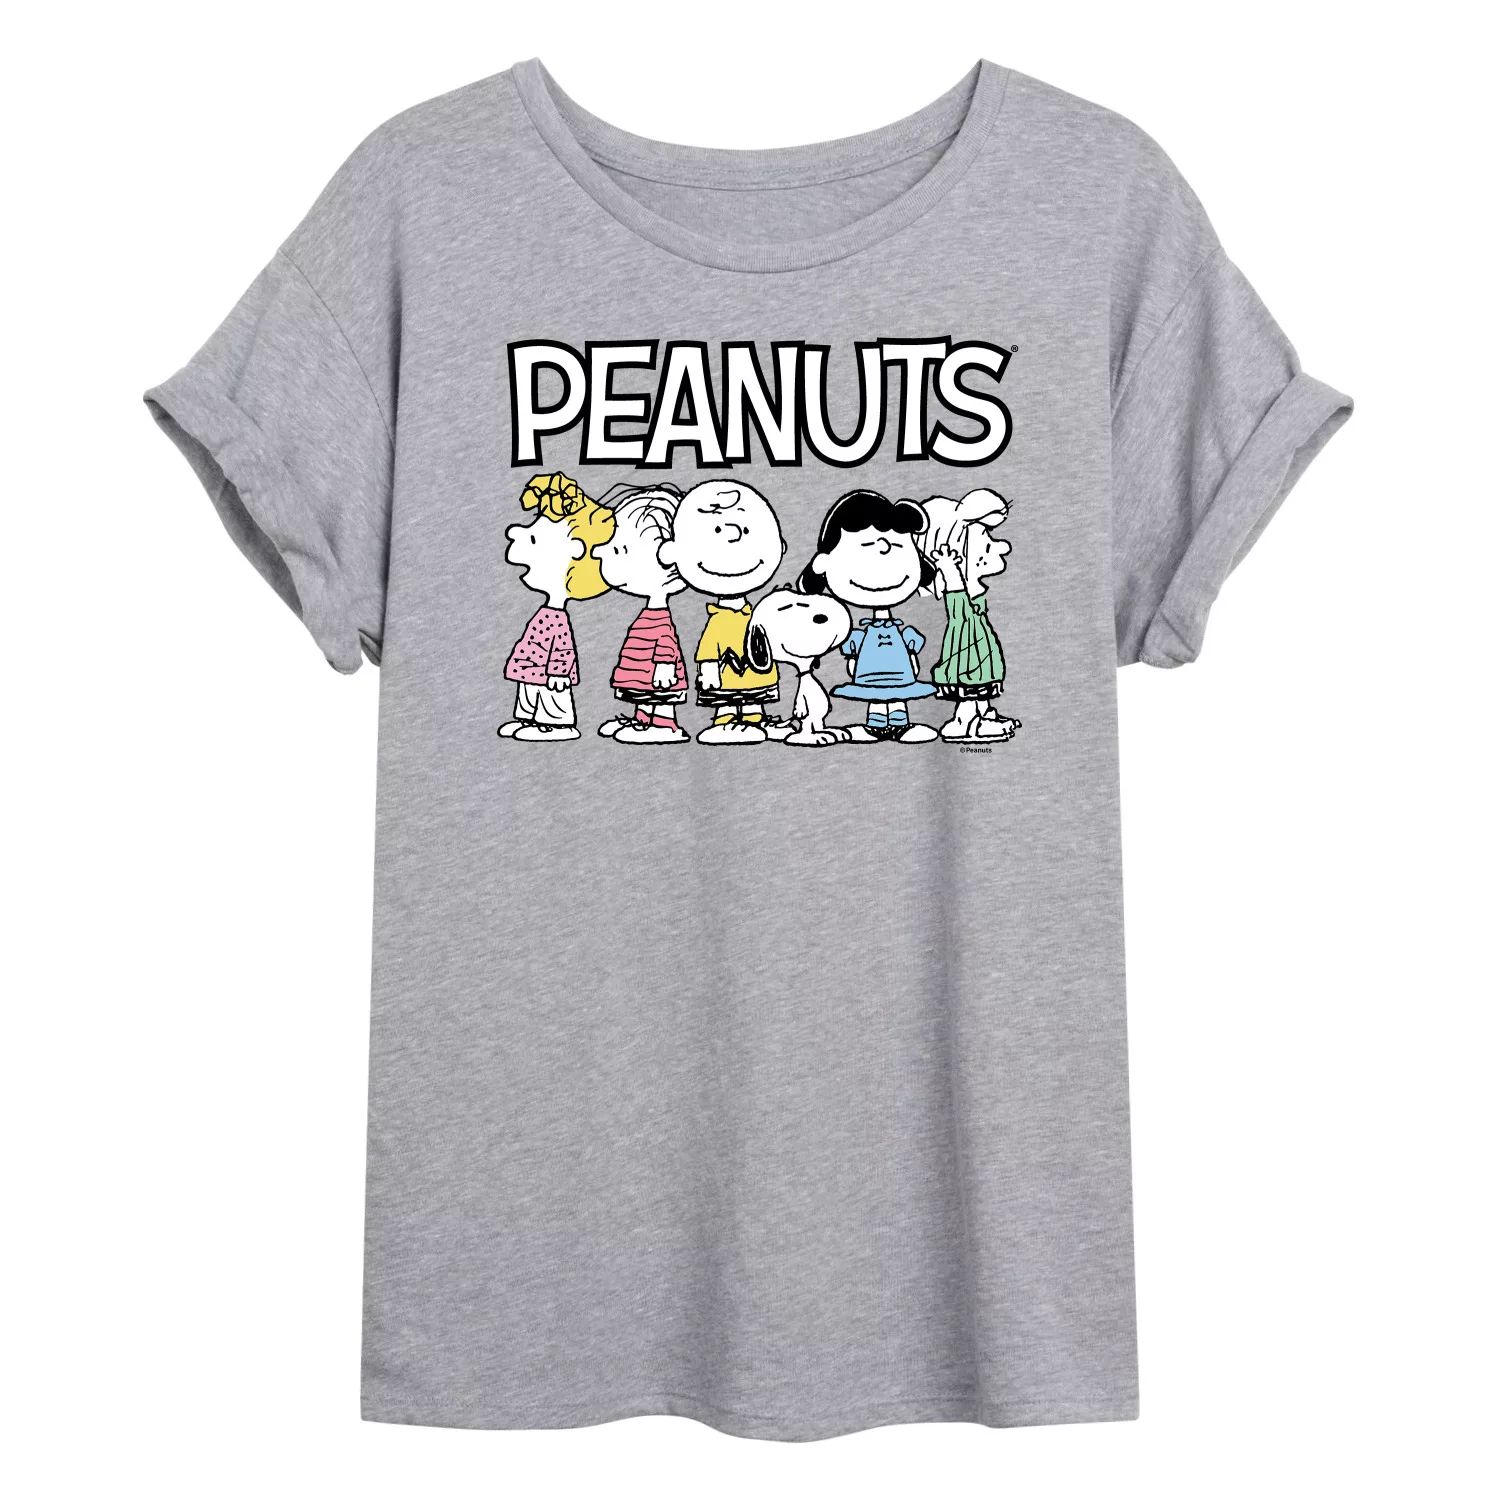 Детская футболка Peanuts Crew с струящимся рисунком и рисунком Licensed Character